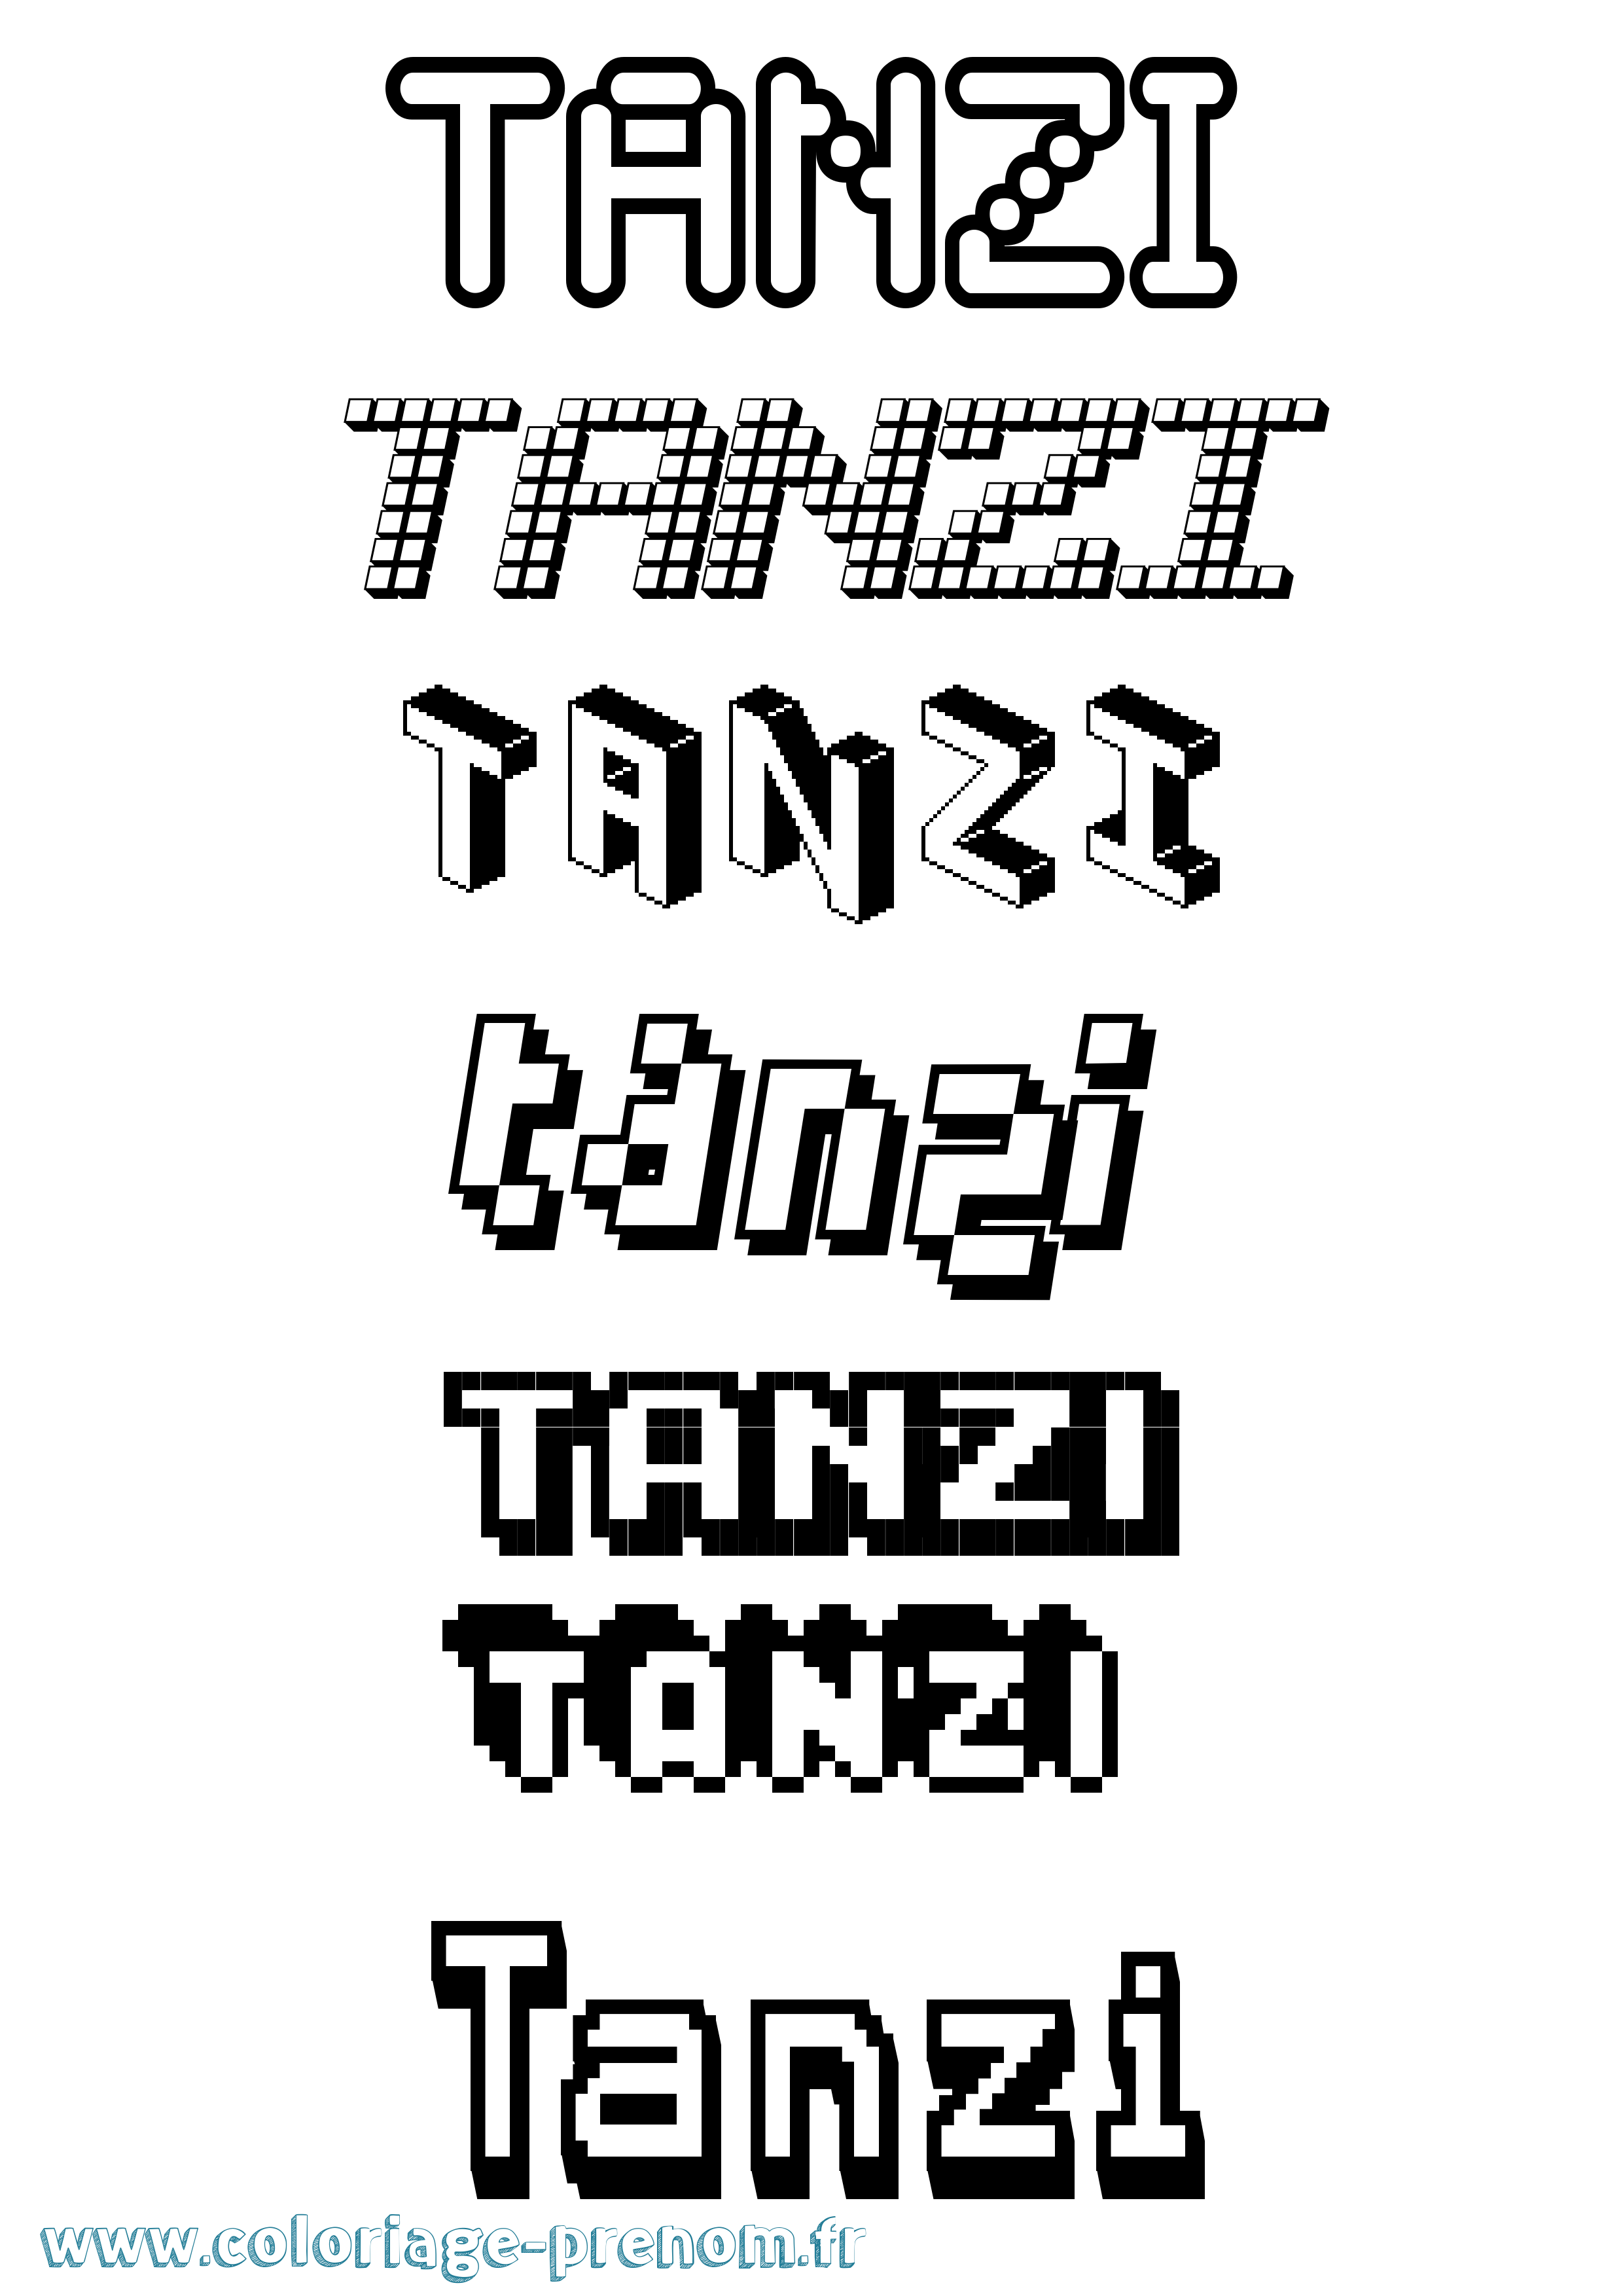 Coloriage prénom Tanzi Pixel